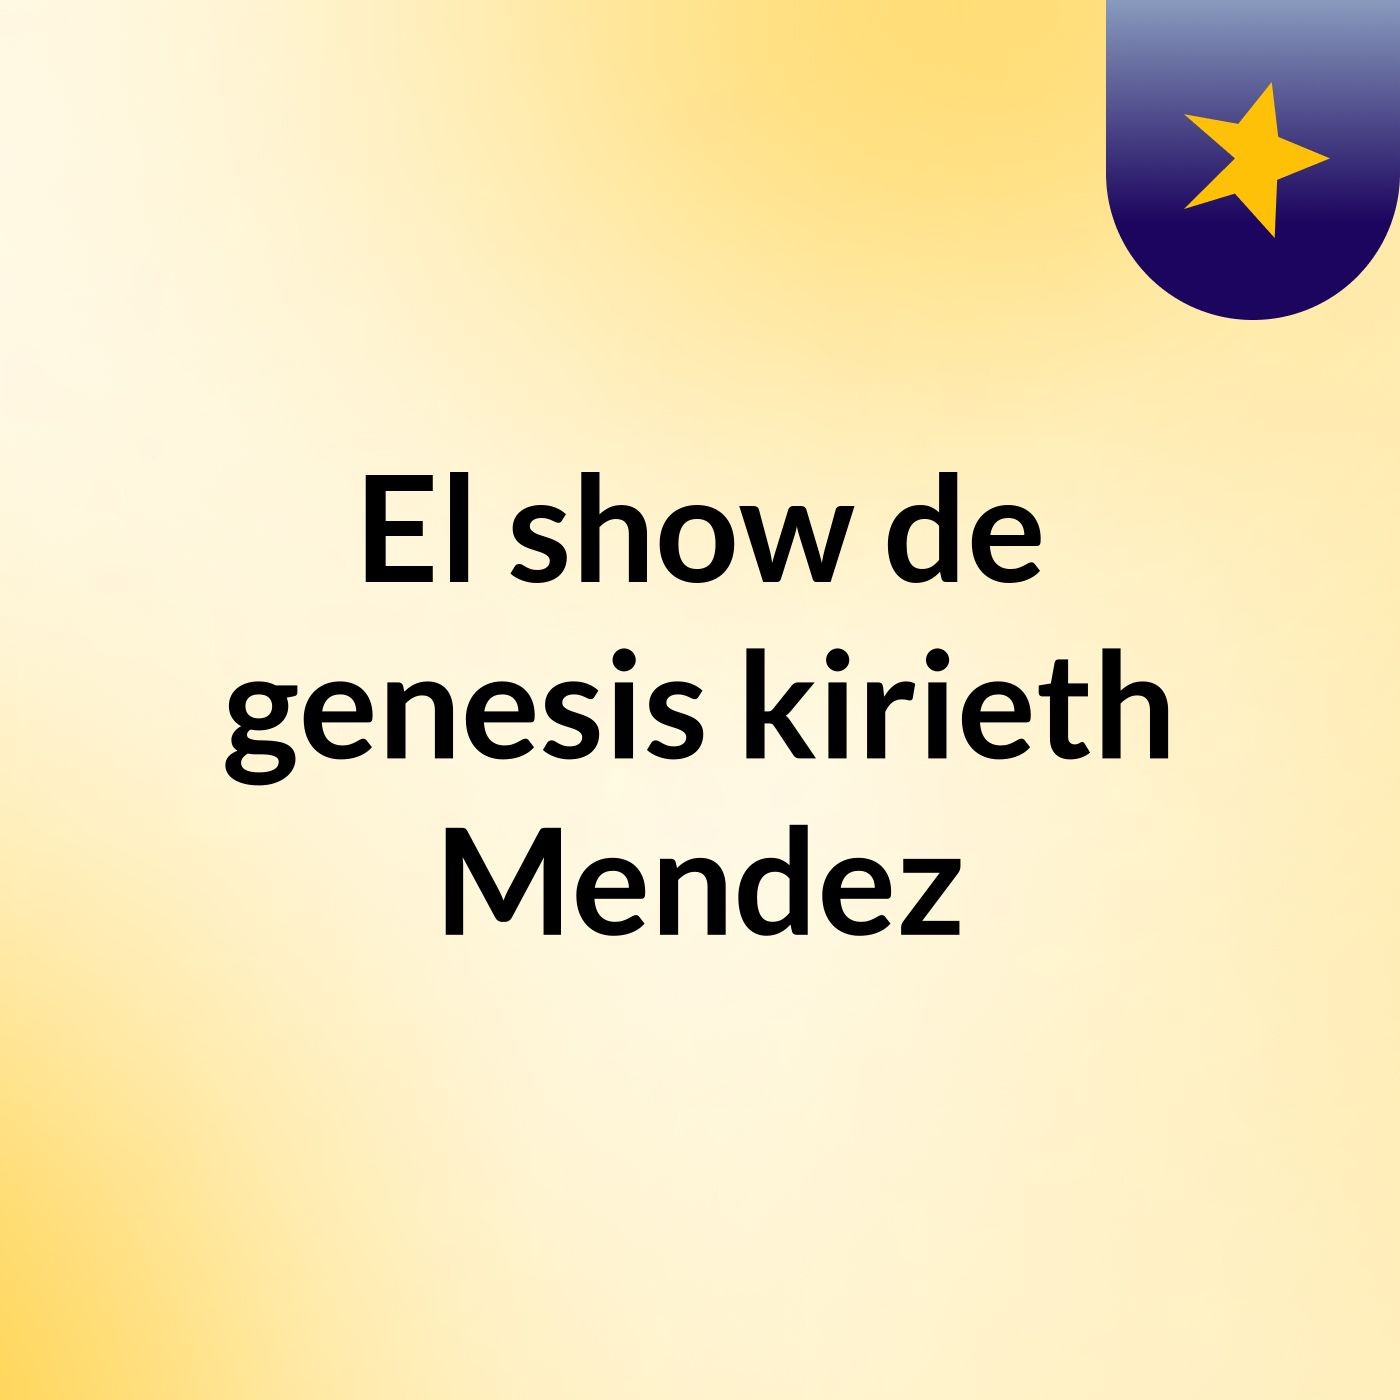 El show de genesis kirieth Mendez